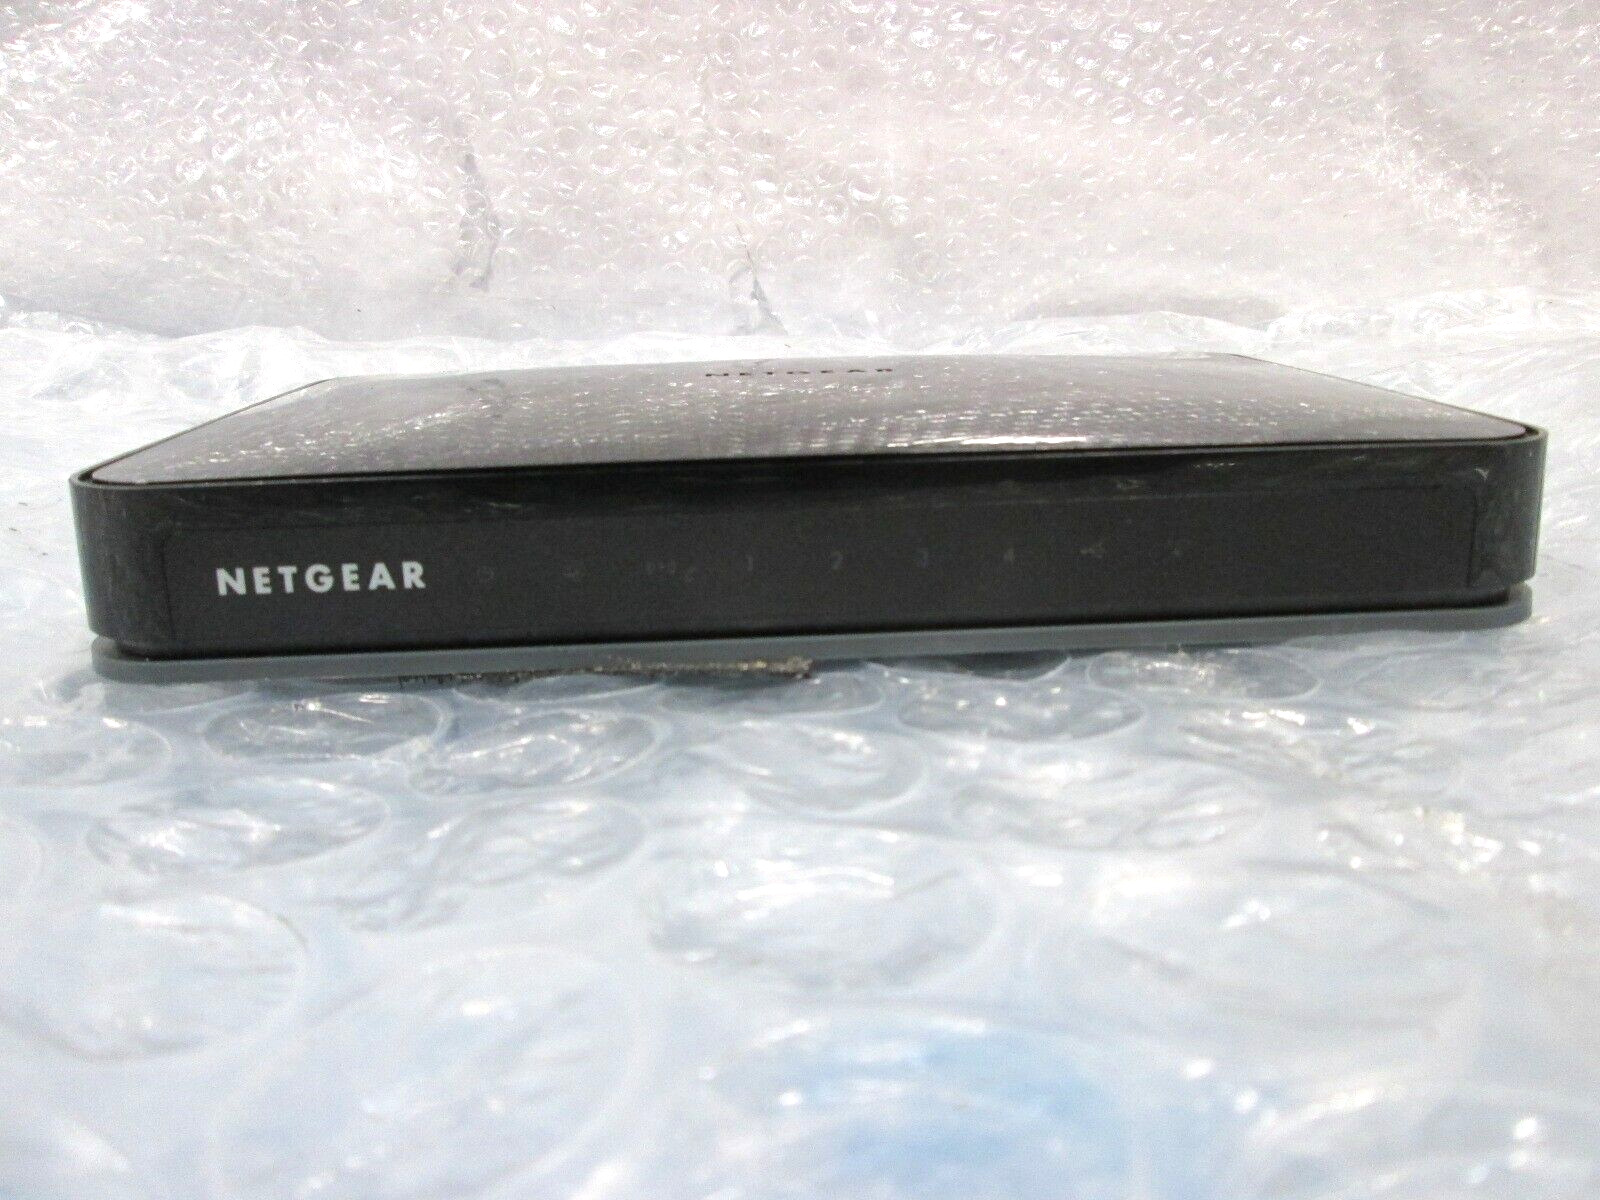 NETGEAR - WNDR3700v5 - N600 Wireless Dual Band Gigabit Router.